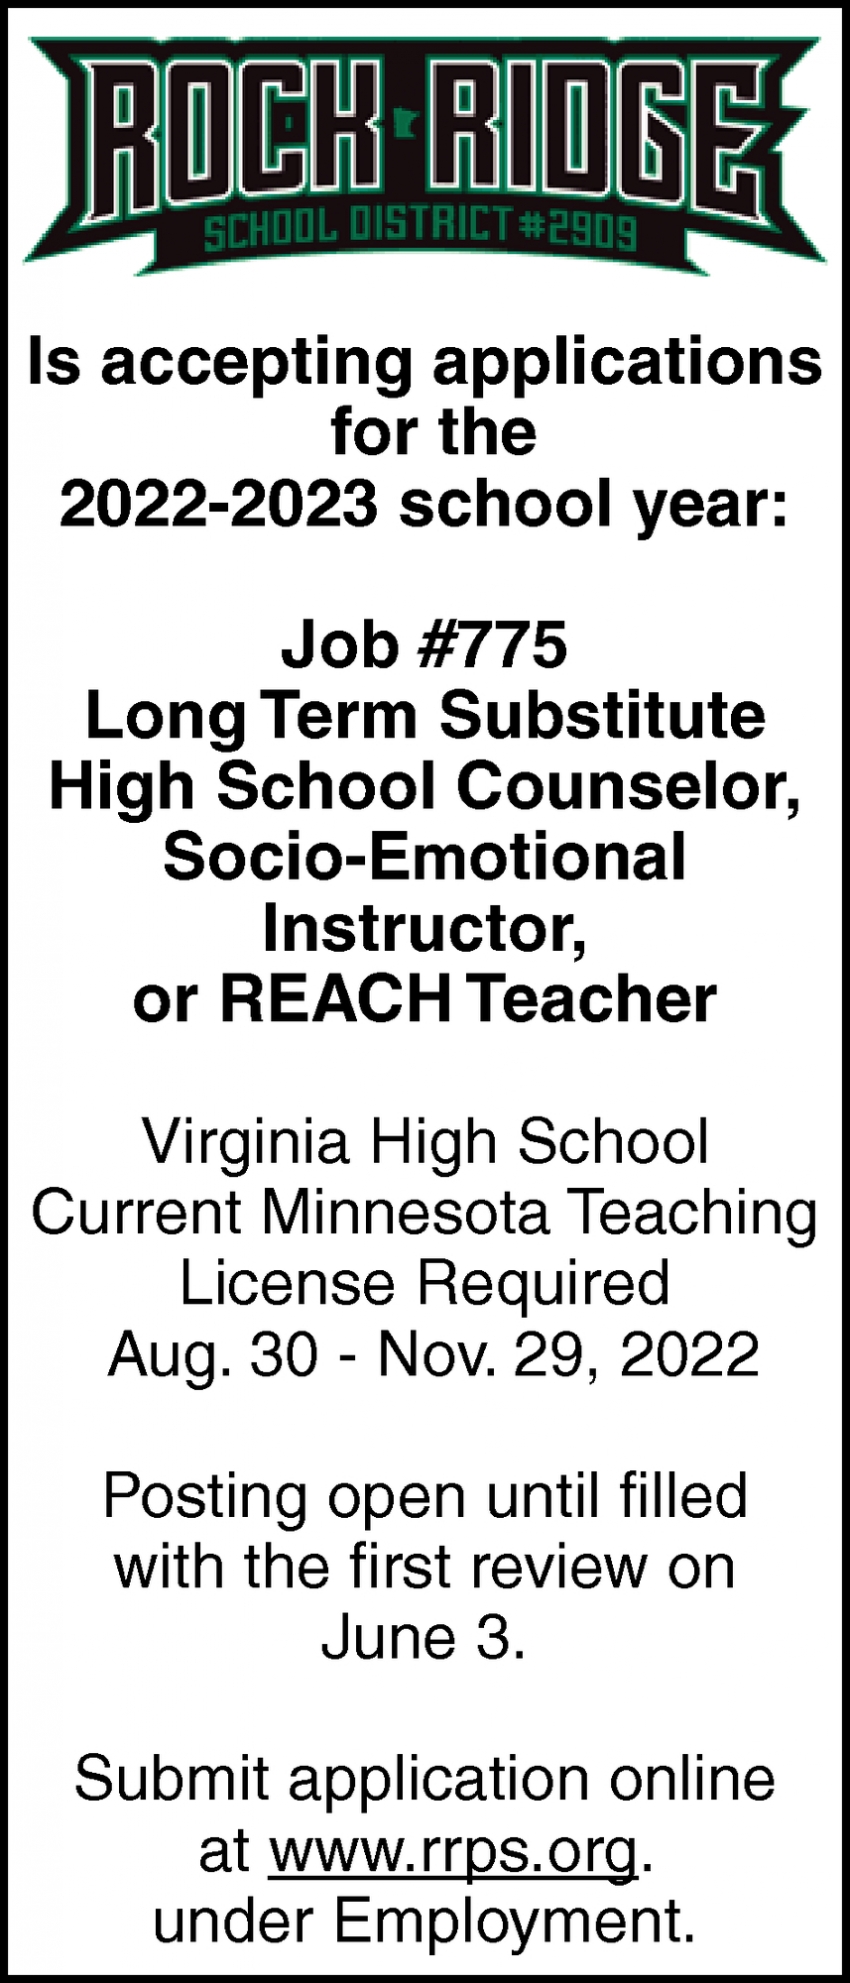 Long Term Substitute High School Counselor, Socio-Emotional Instructor, REACH Teacher